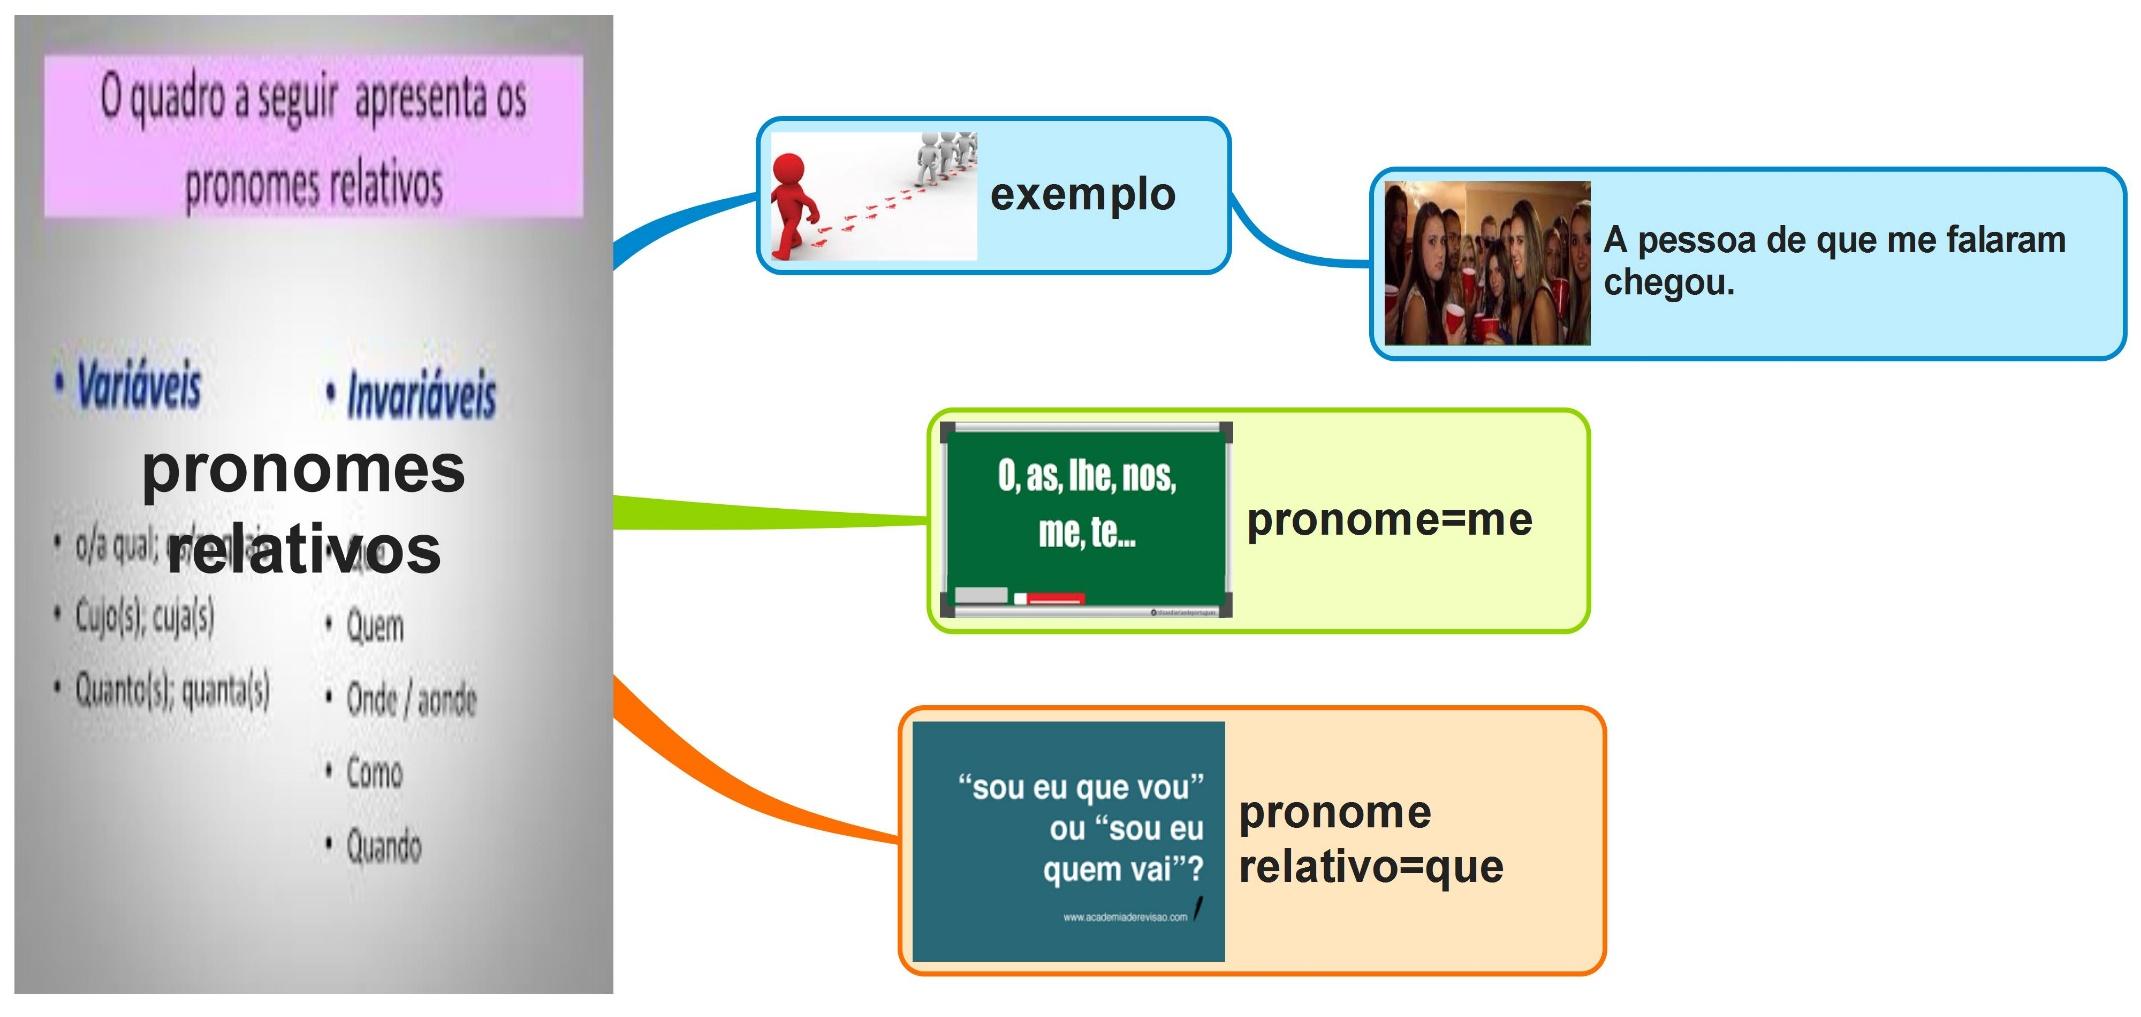 capqn - Próclise - Pronomes